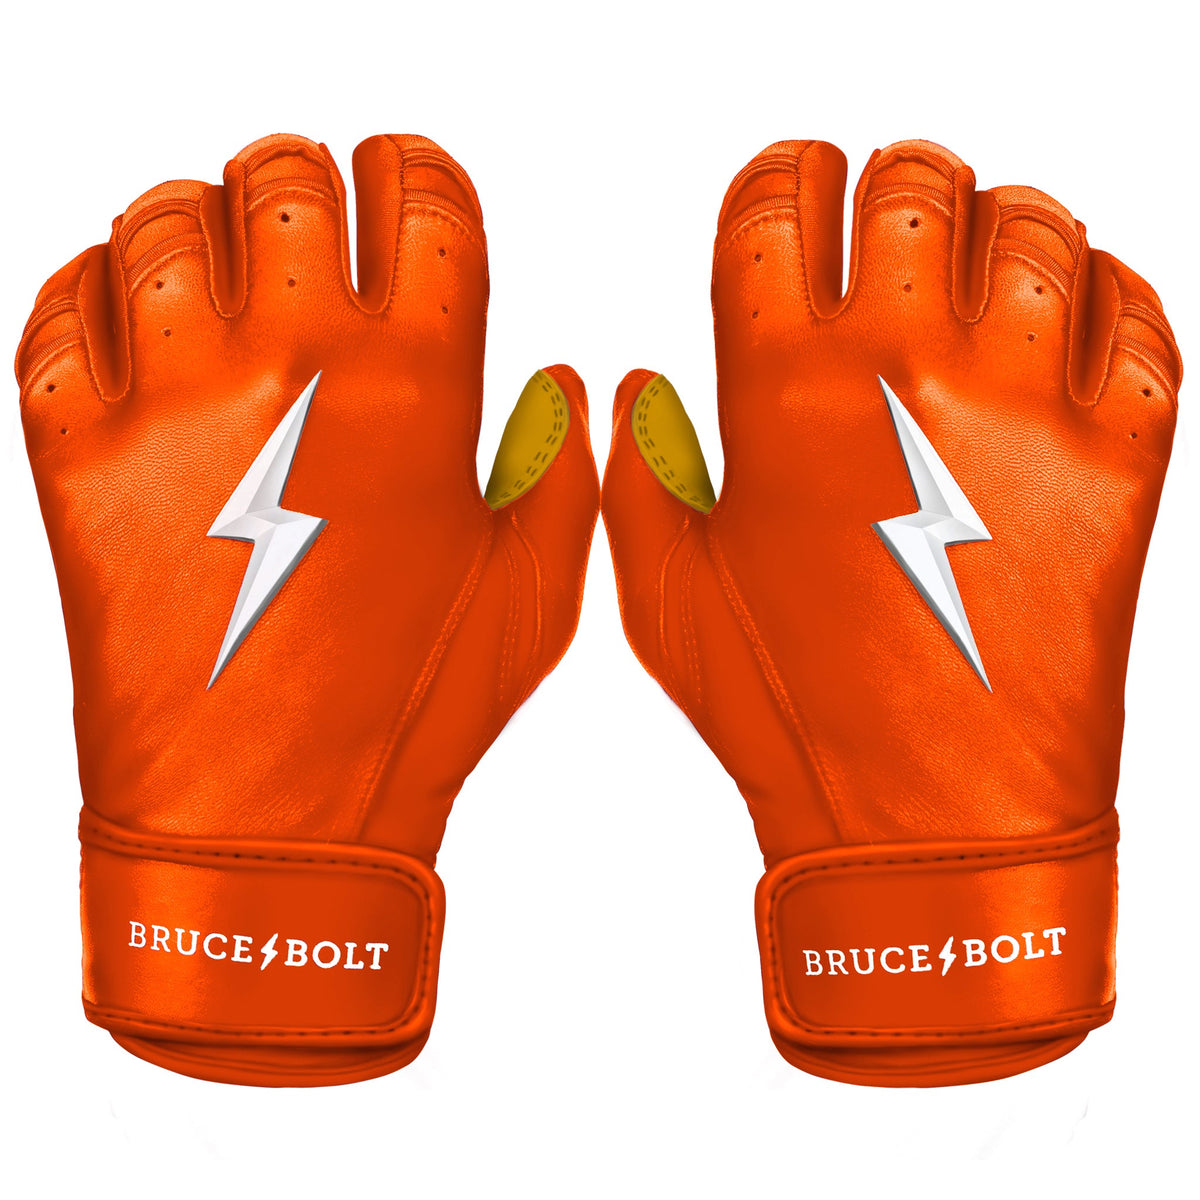 All Orange Batting Gloves | Leather Batting Gloves – BRUCE BOLT